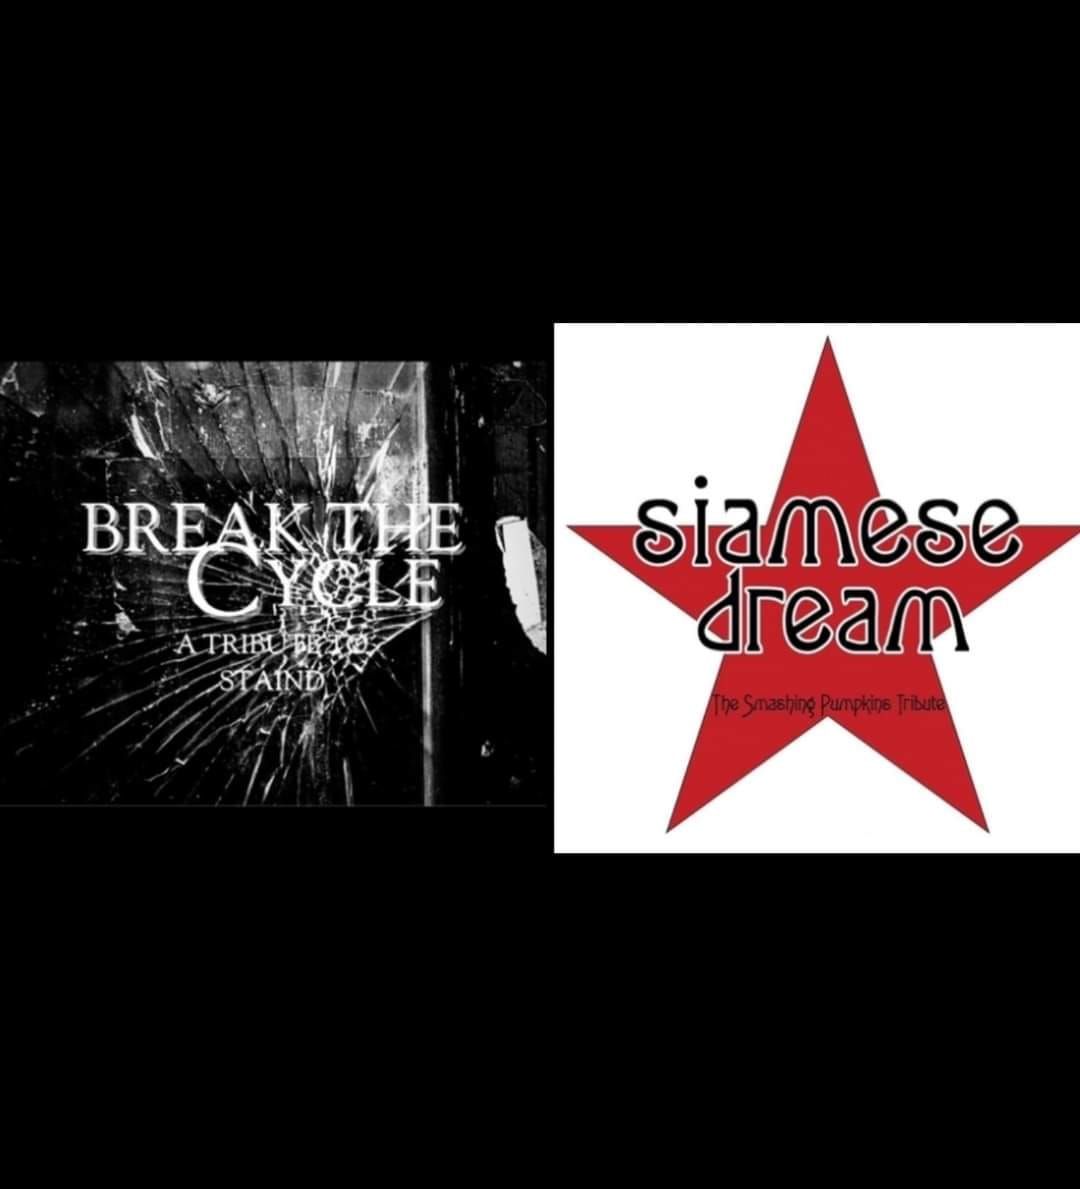 Break The Cycle (Staind Tribute) + Siaseme Dream (Smashing Pumpkins Tribute)